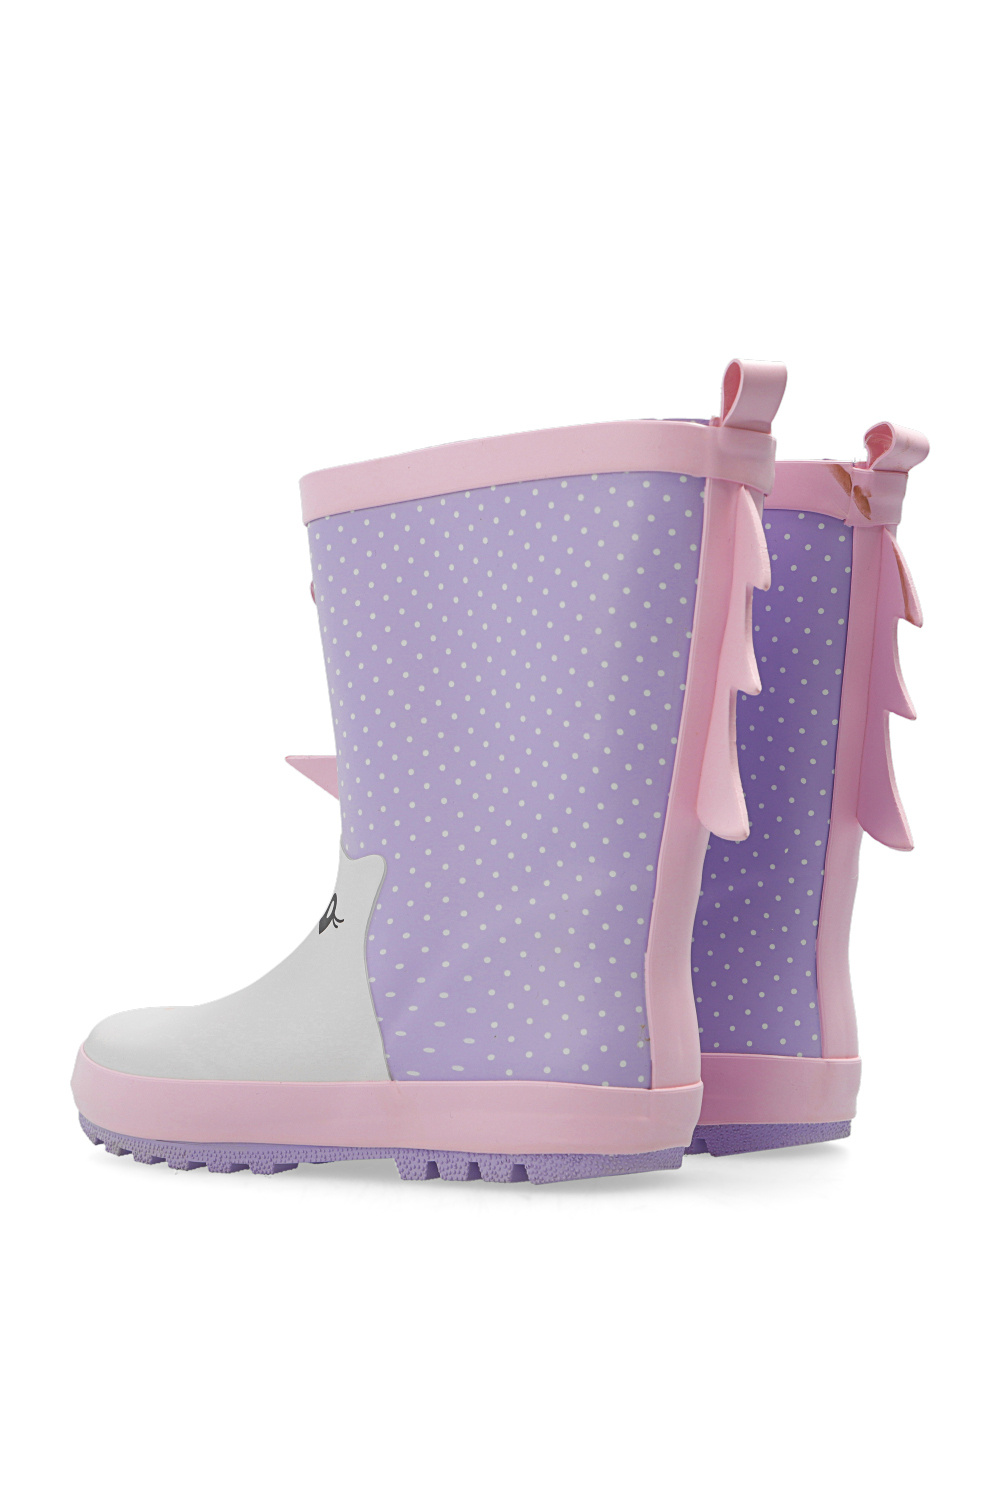 Chipmunks ‘Una Unicorn’ rain boots